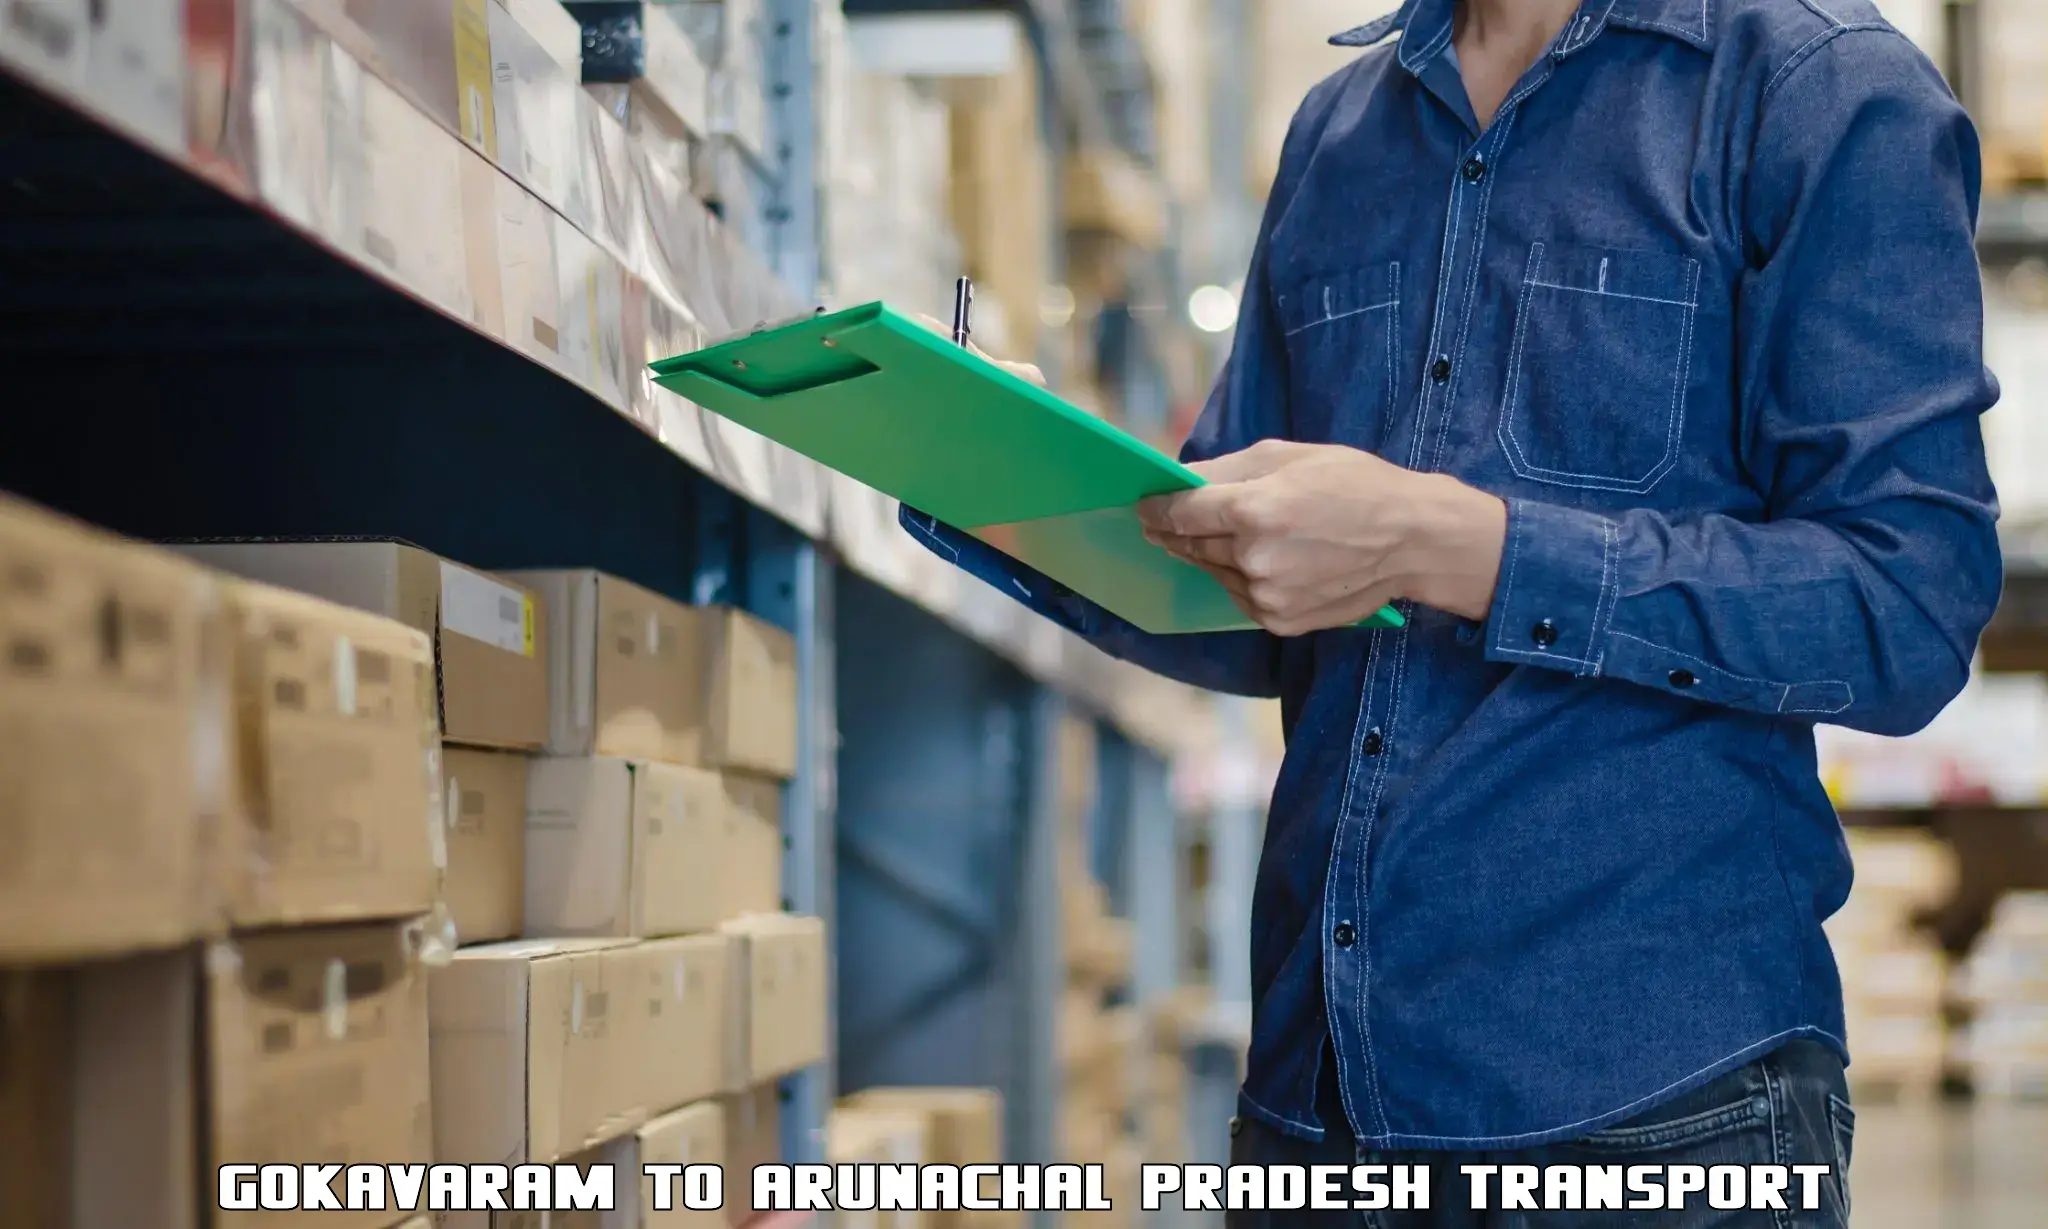 Container transport service Gokavaram to Arunachal Pradesh